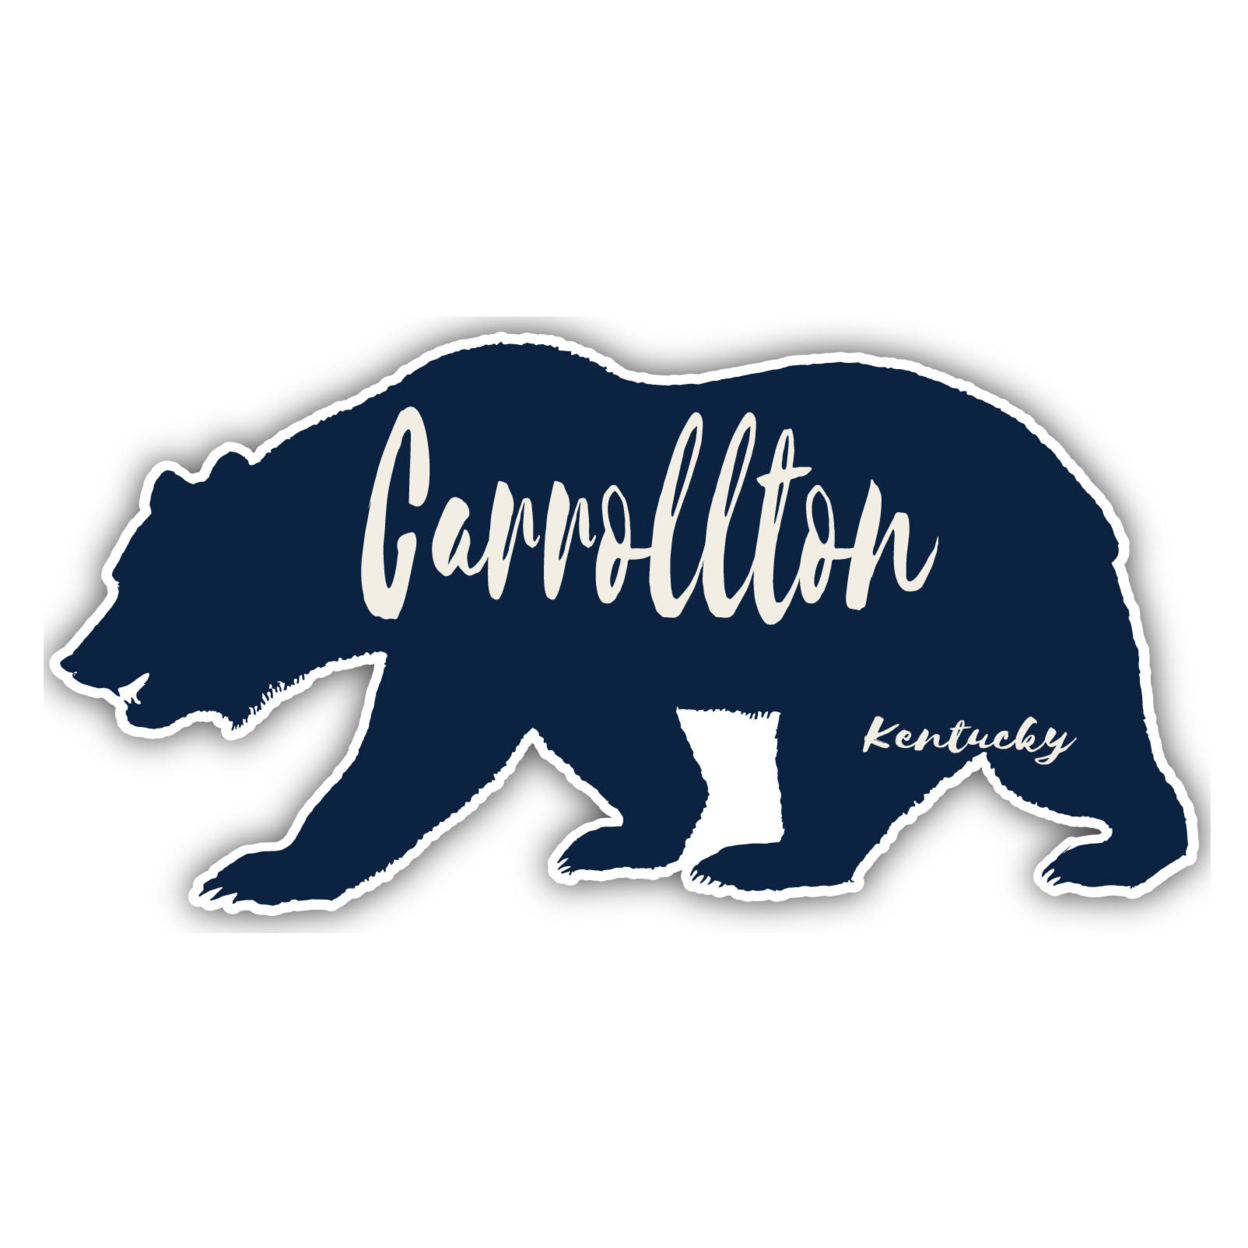 Carrollton Kentucky Souvenir Decorative Stickers (Choose Theme And Size) - Single Unit, 10-Inch, Bear